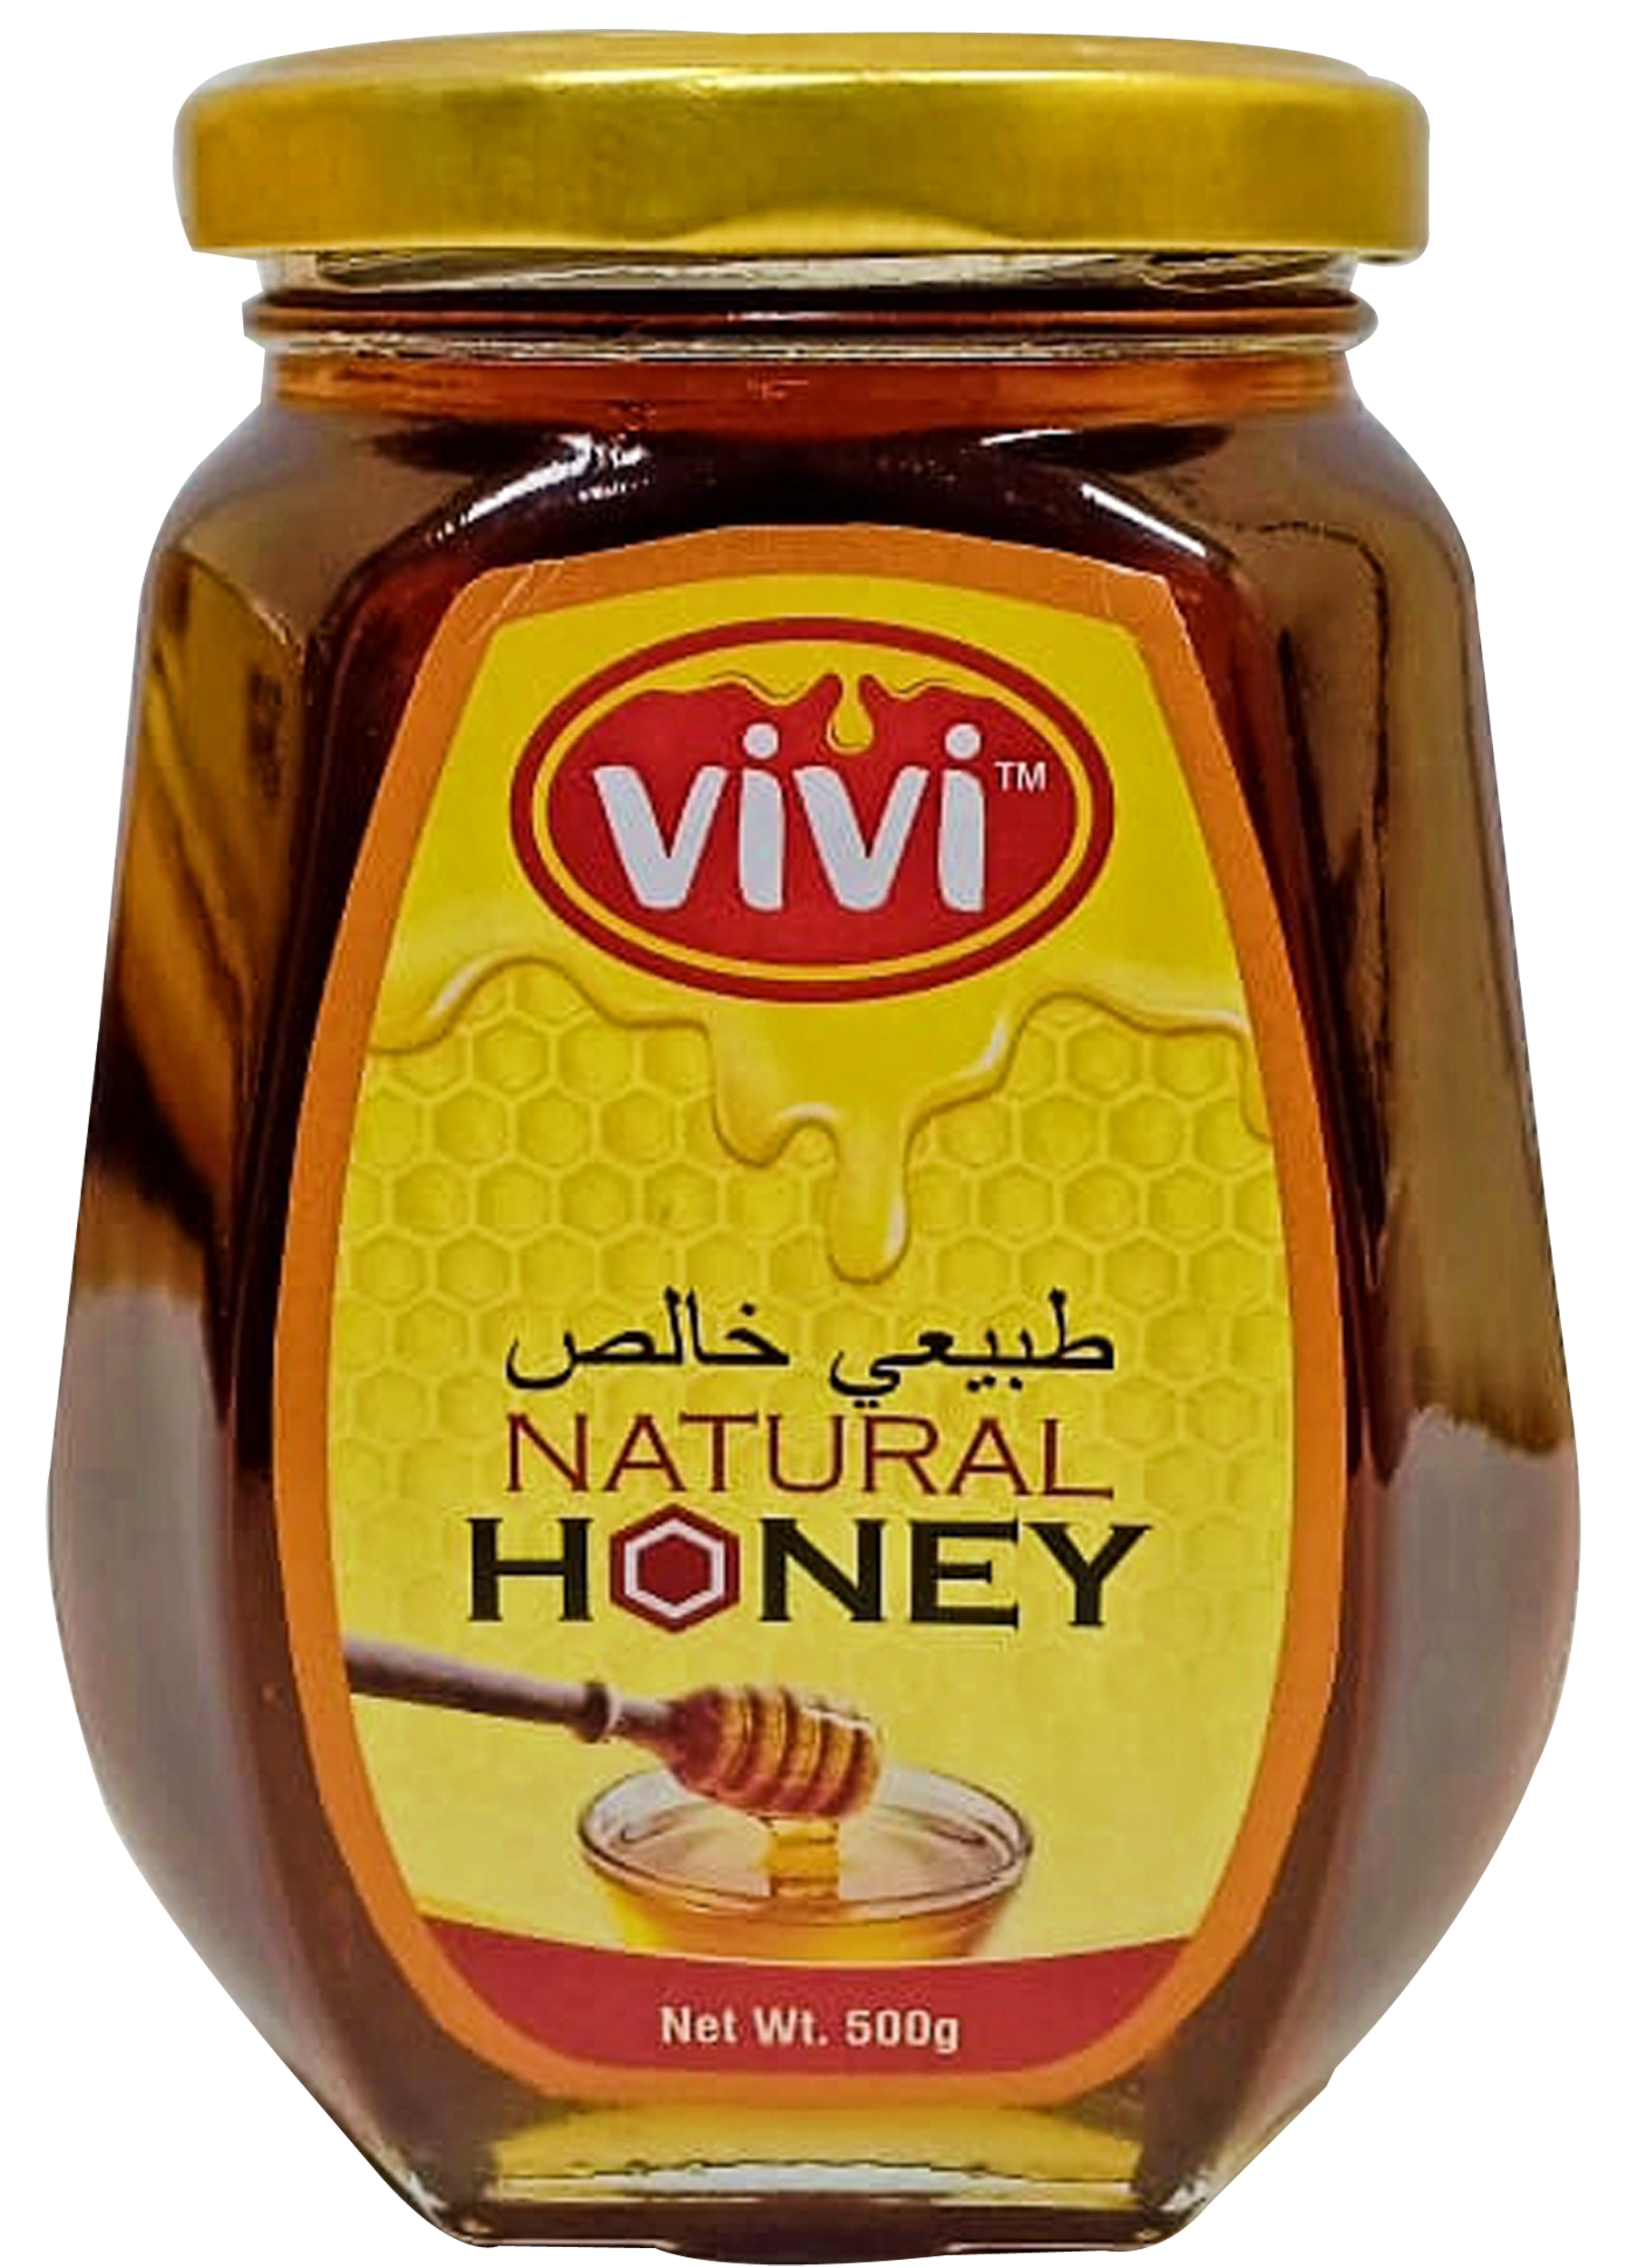 VIVI Natural Honey - Octa glass